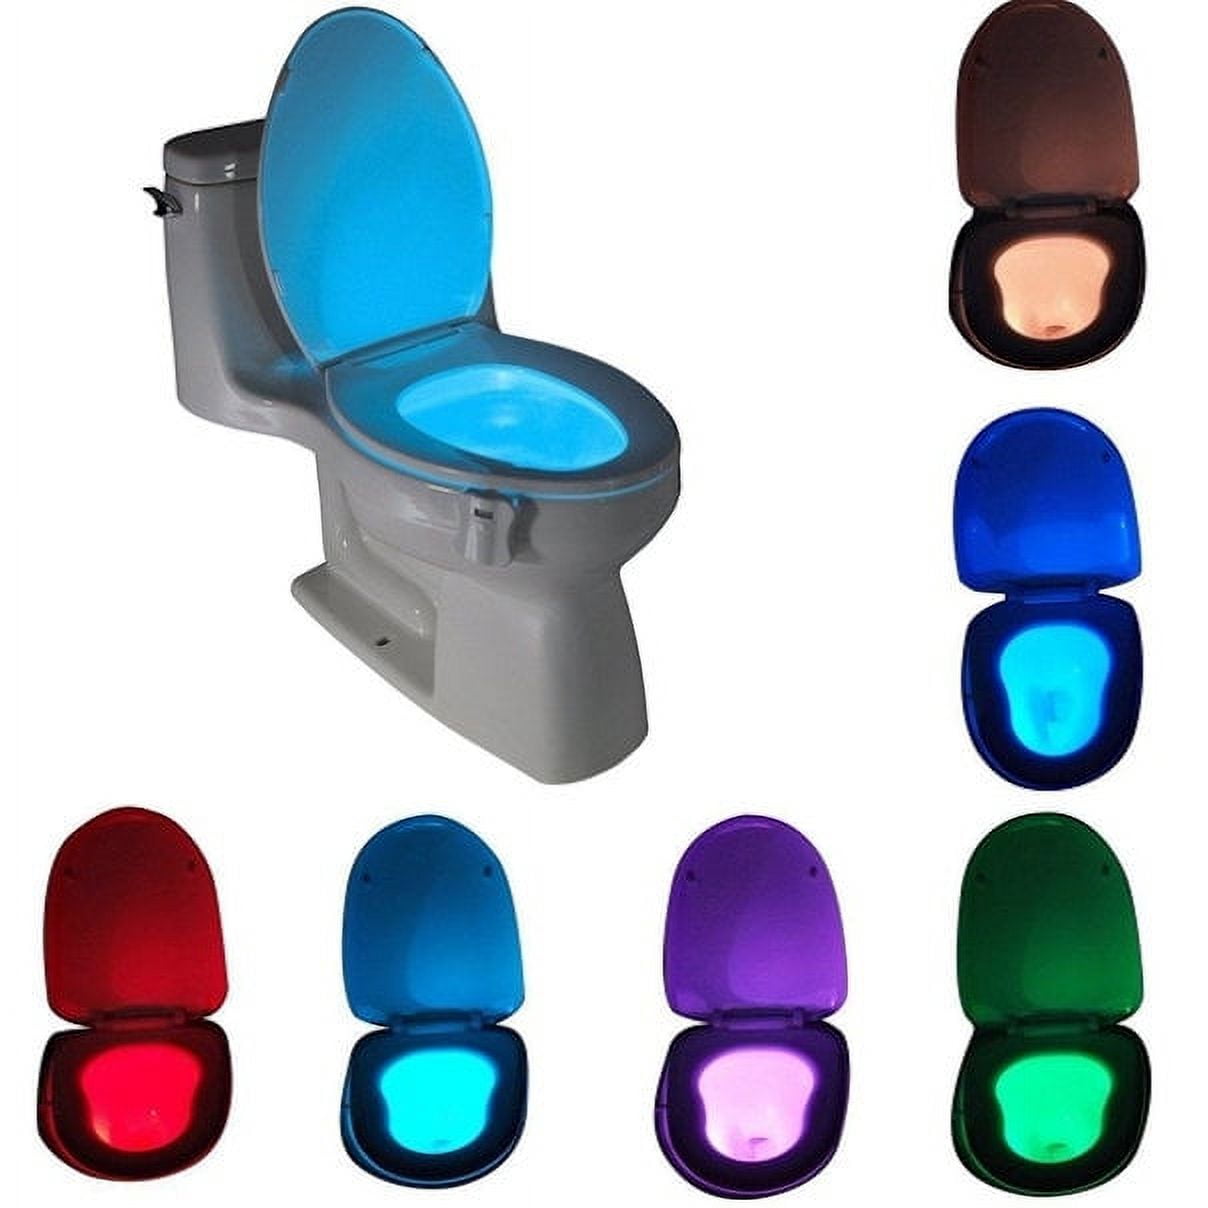 The toilet bowl at my salon has an LED light inside. : r/mildlyinteresting